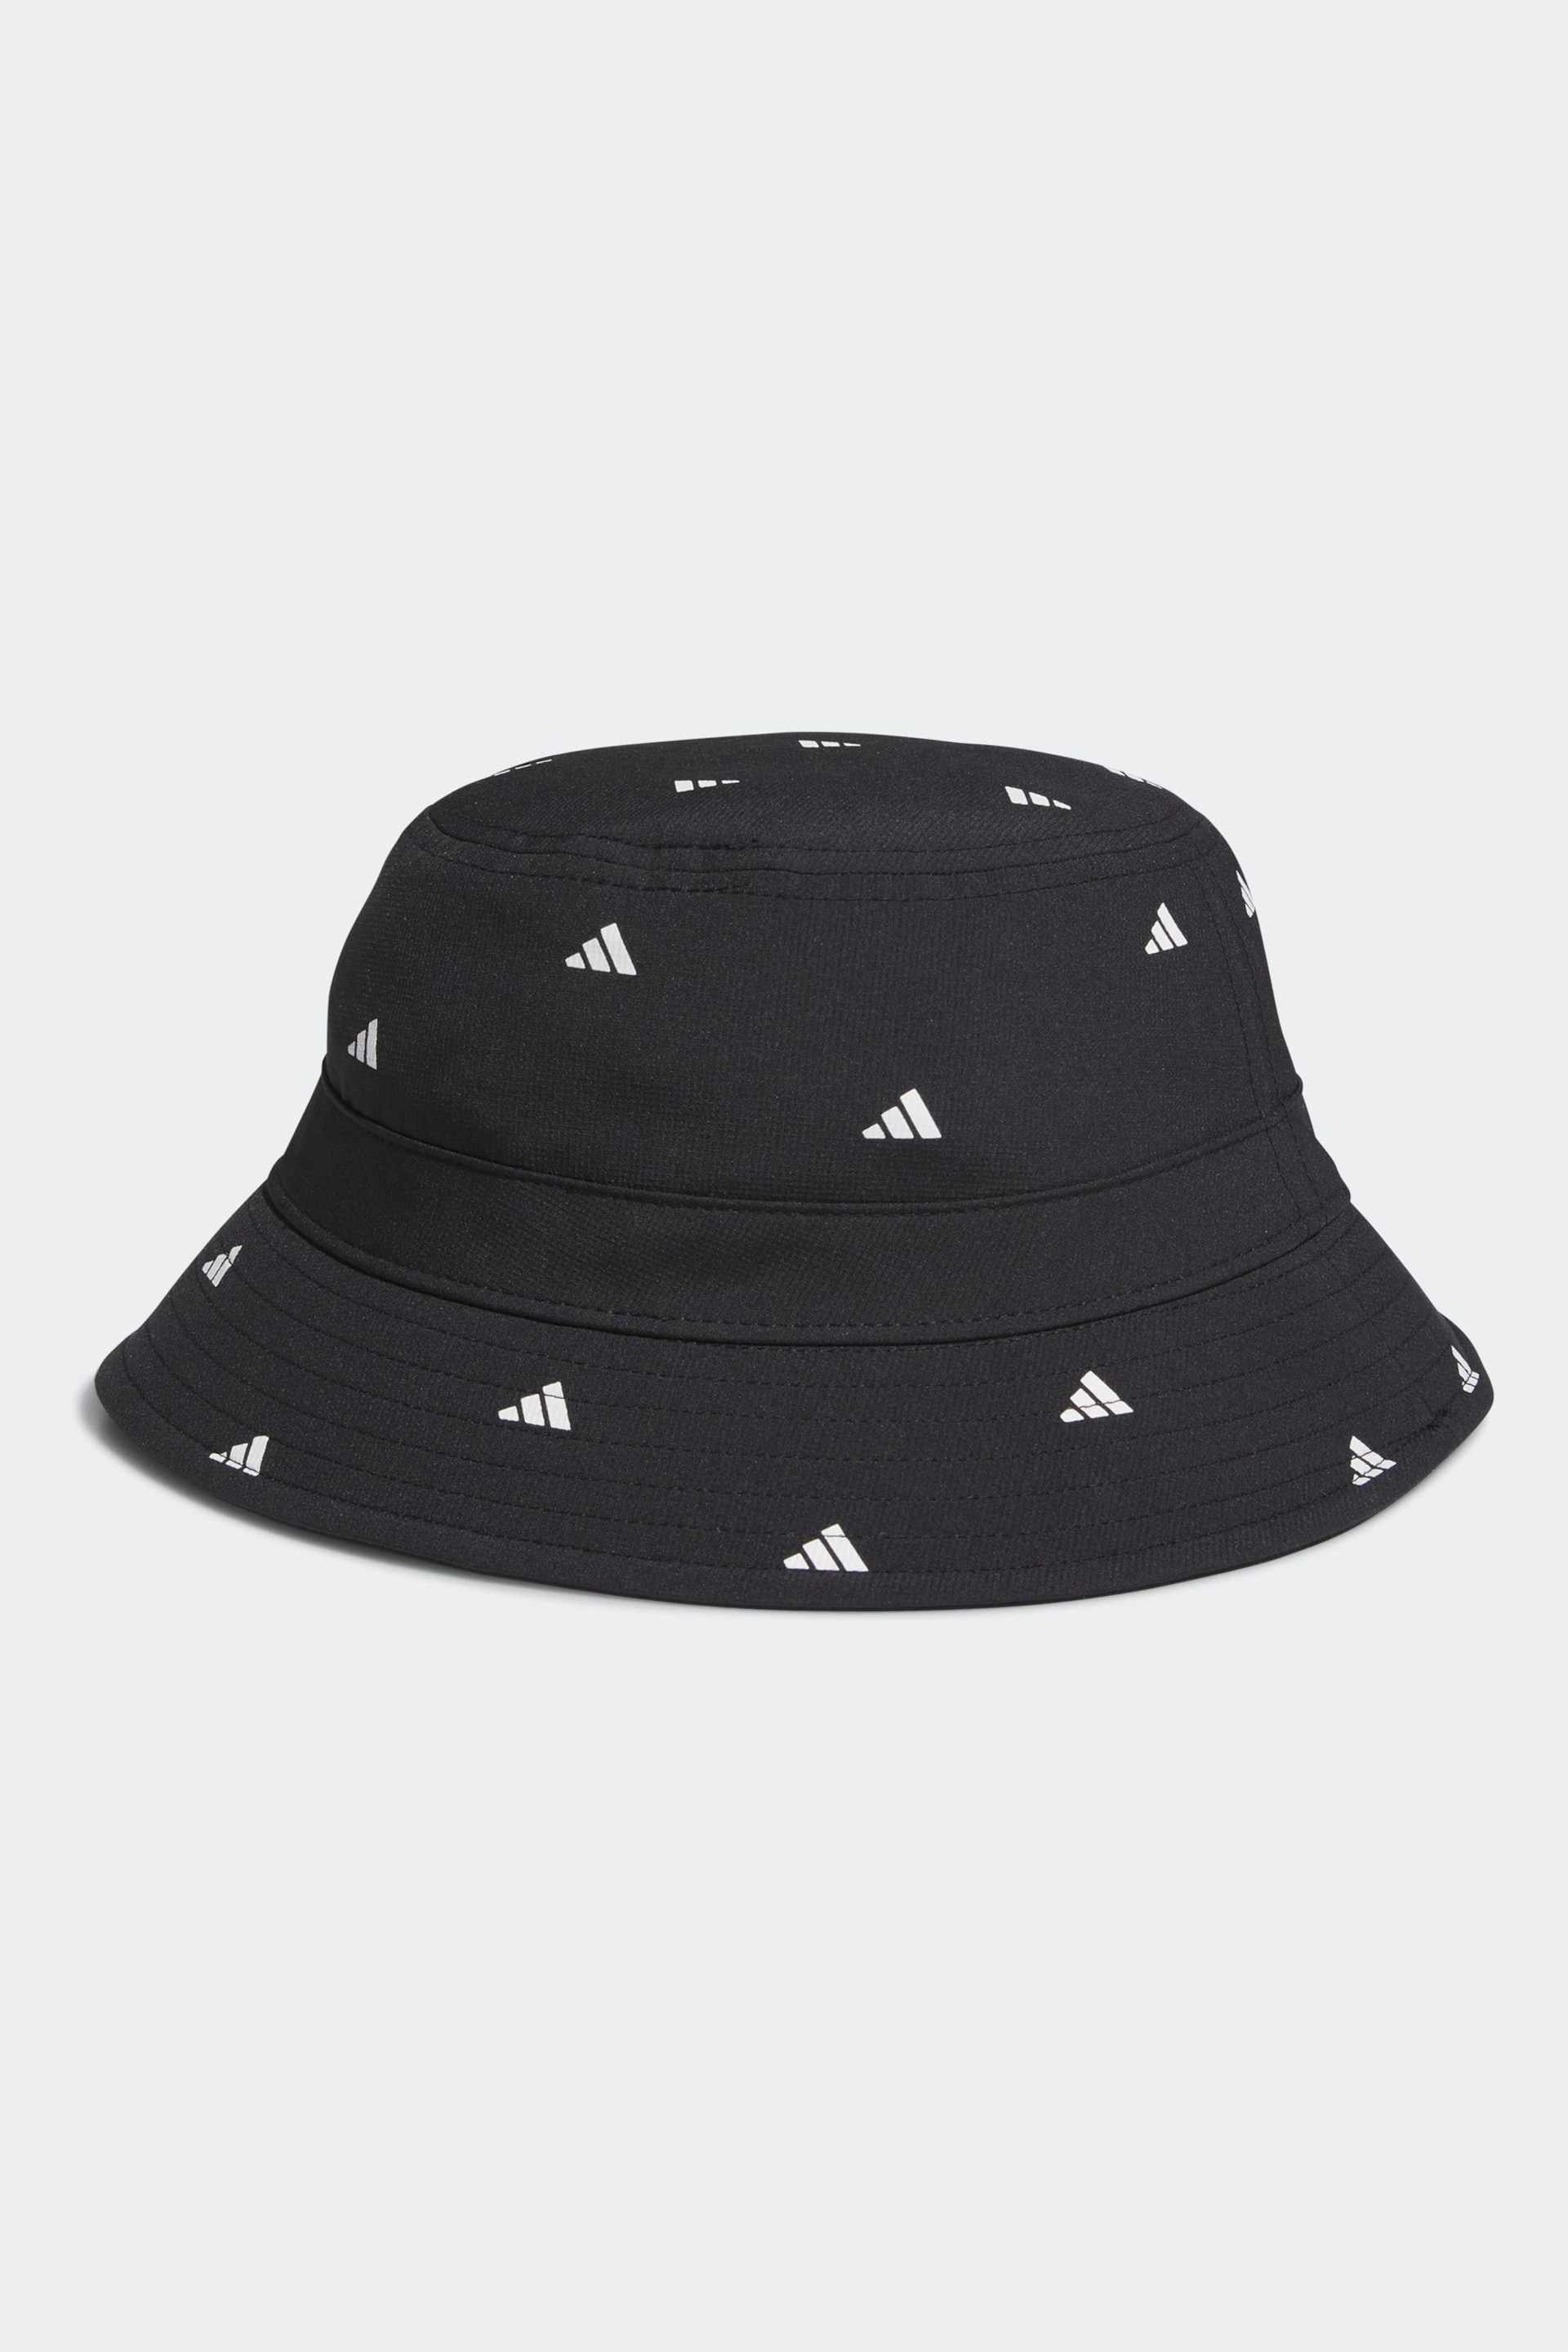 adidas Golf Womens Printed Bucket Hat - Image 2 of 4